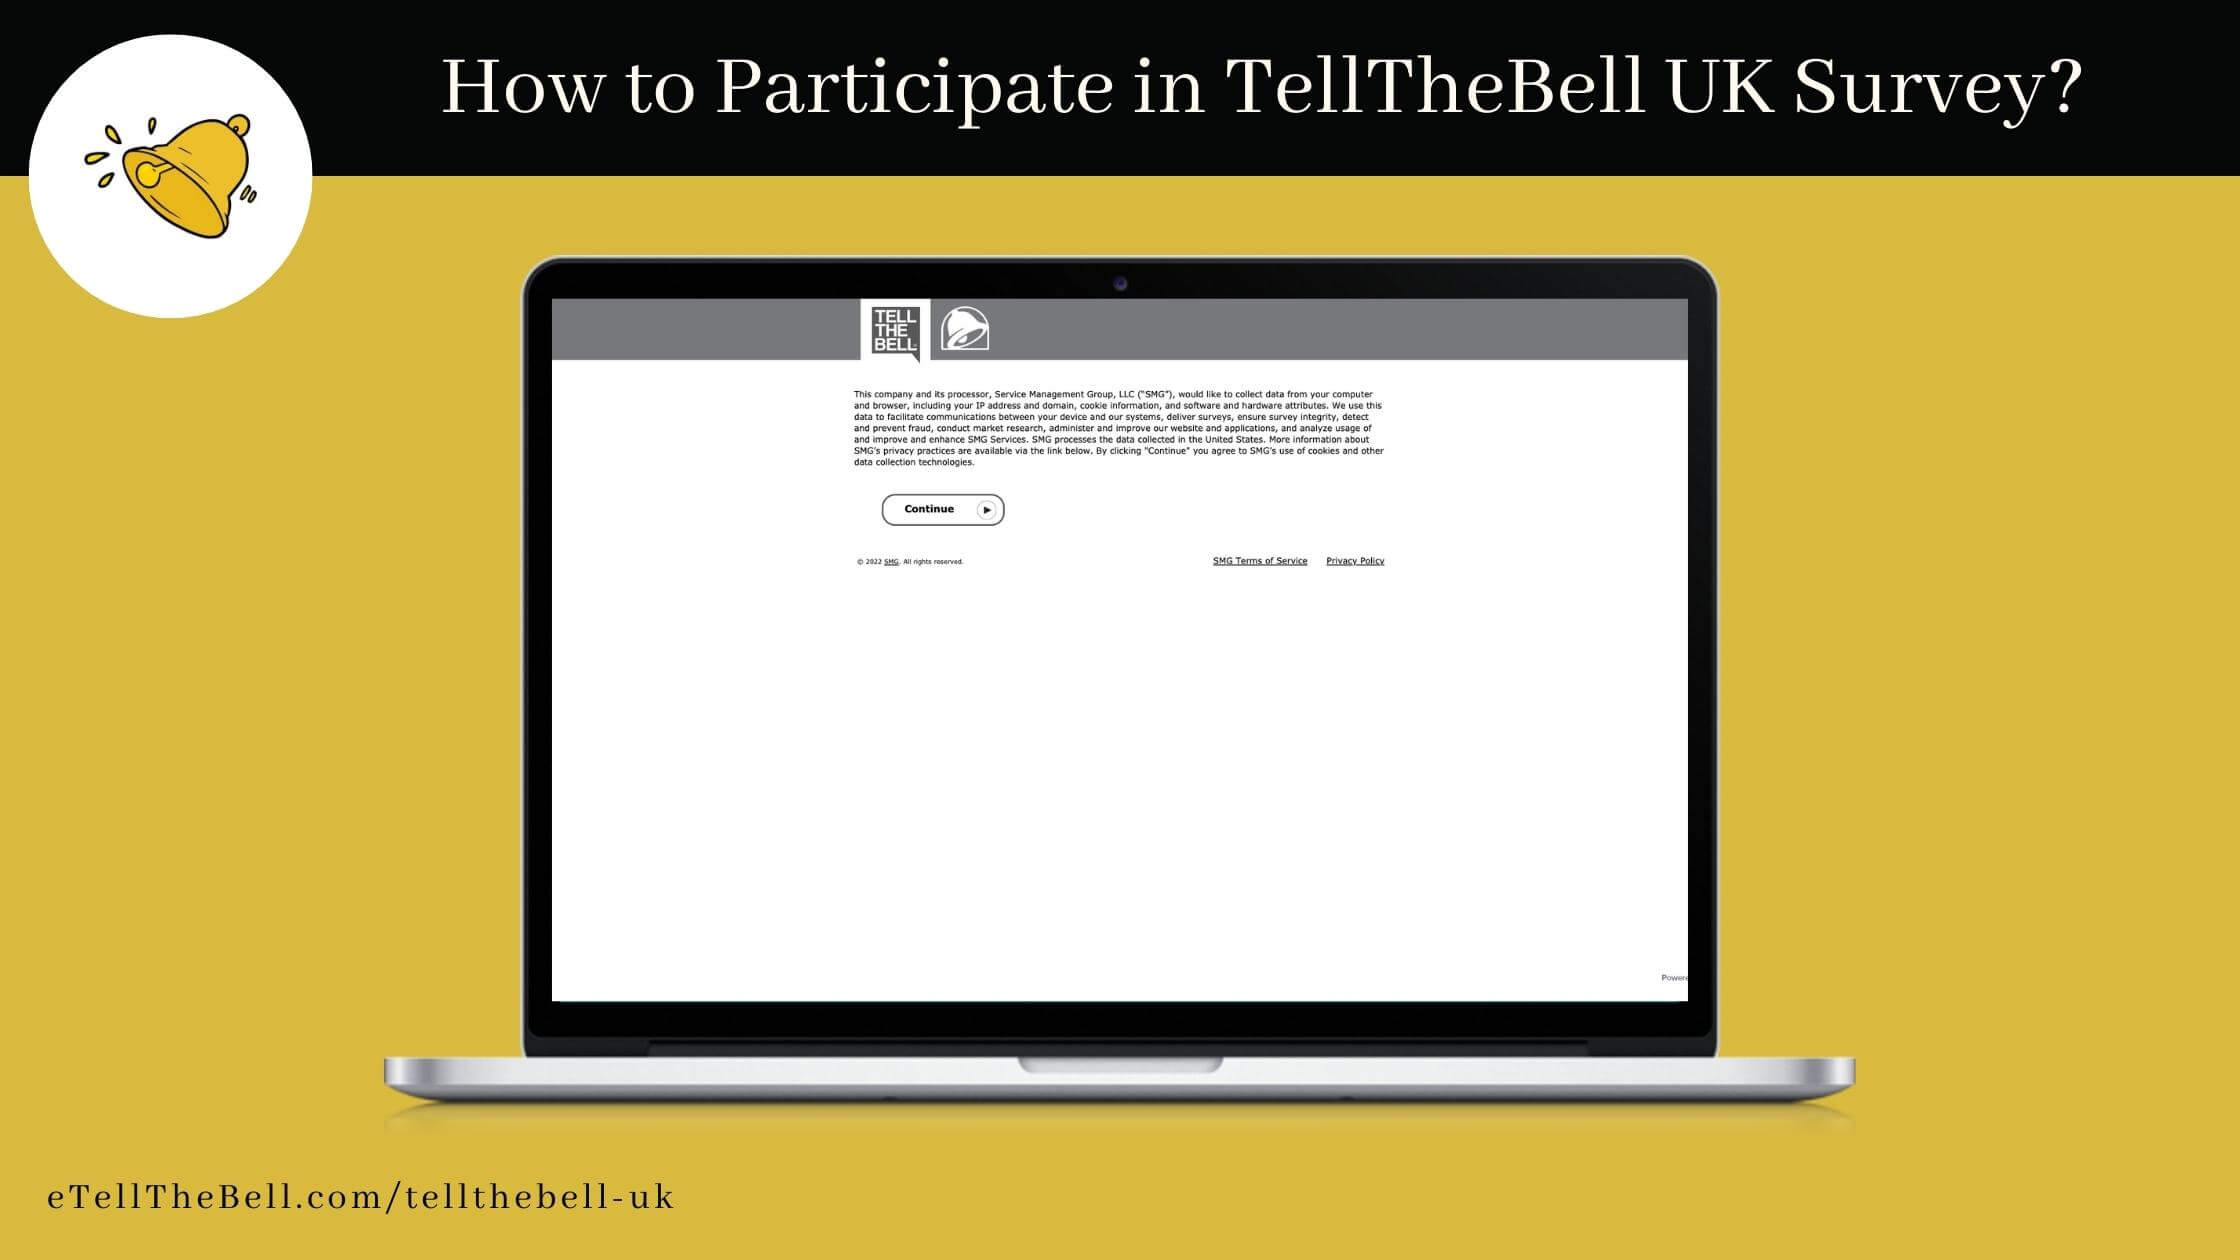 Open TellTheBell UK Survey Portal